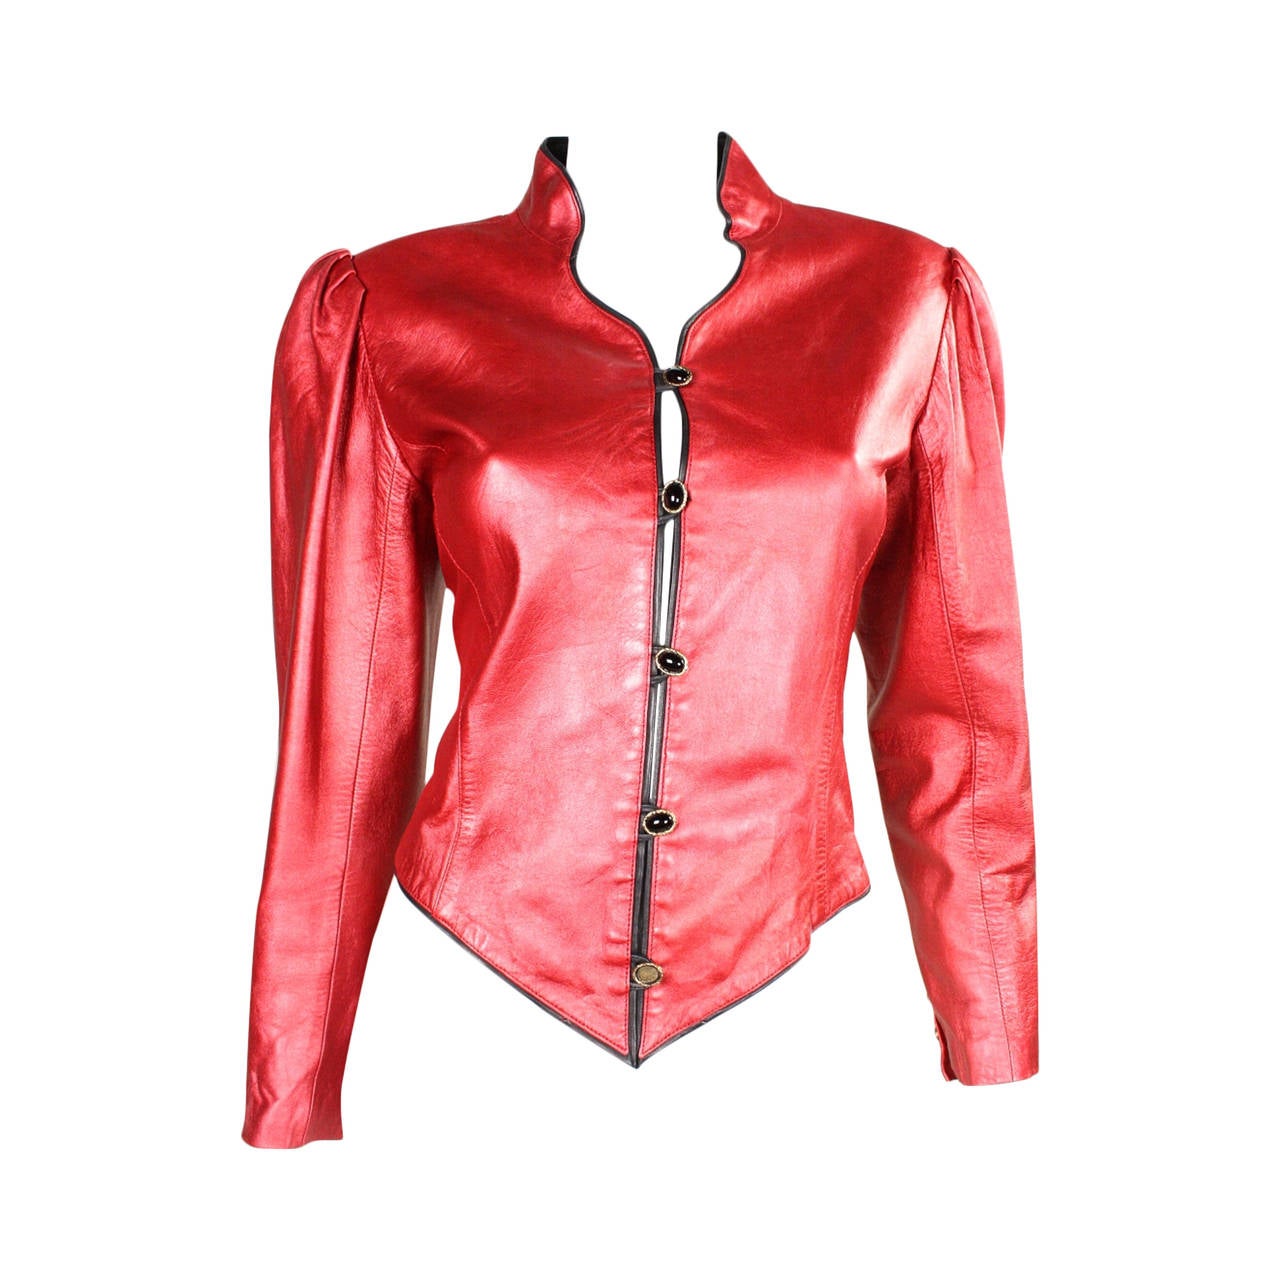 Ungaro Metallic Red Leather Jacket, 1980s  For Sale